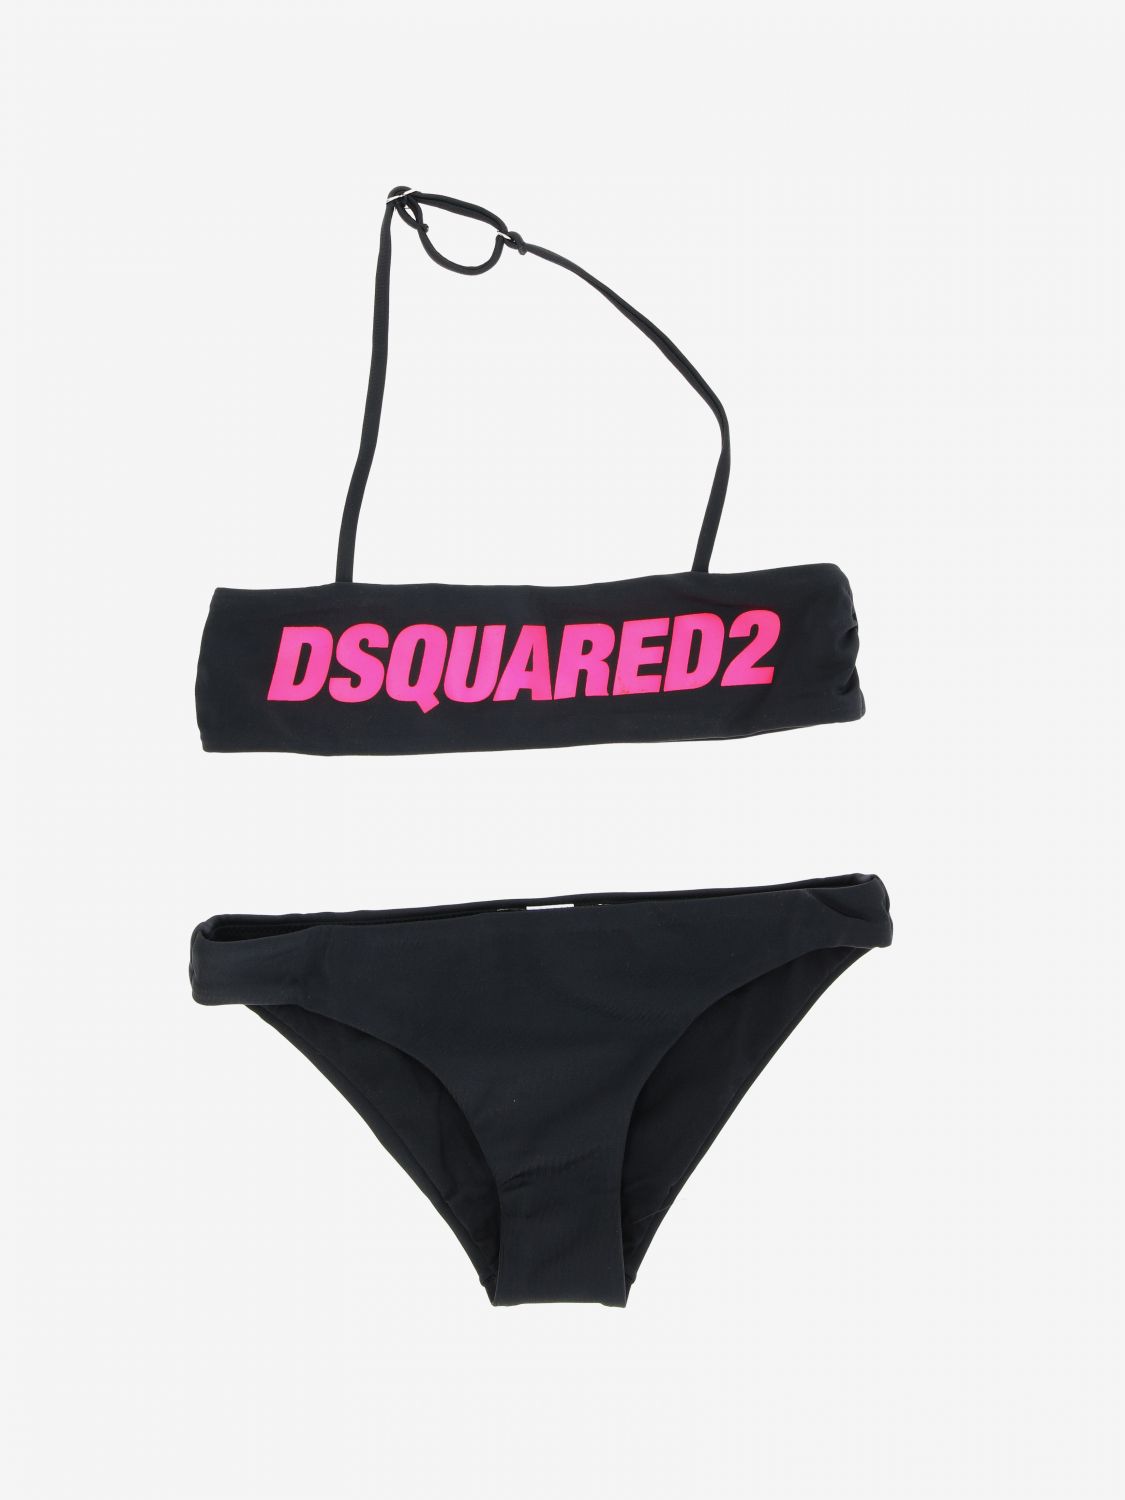 dsquared swimwear 2018